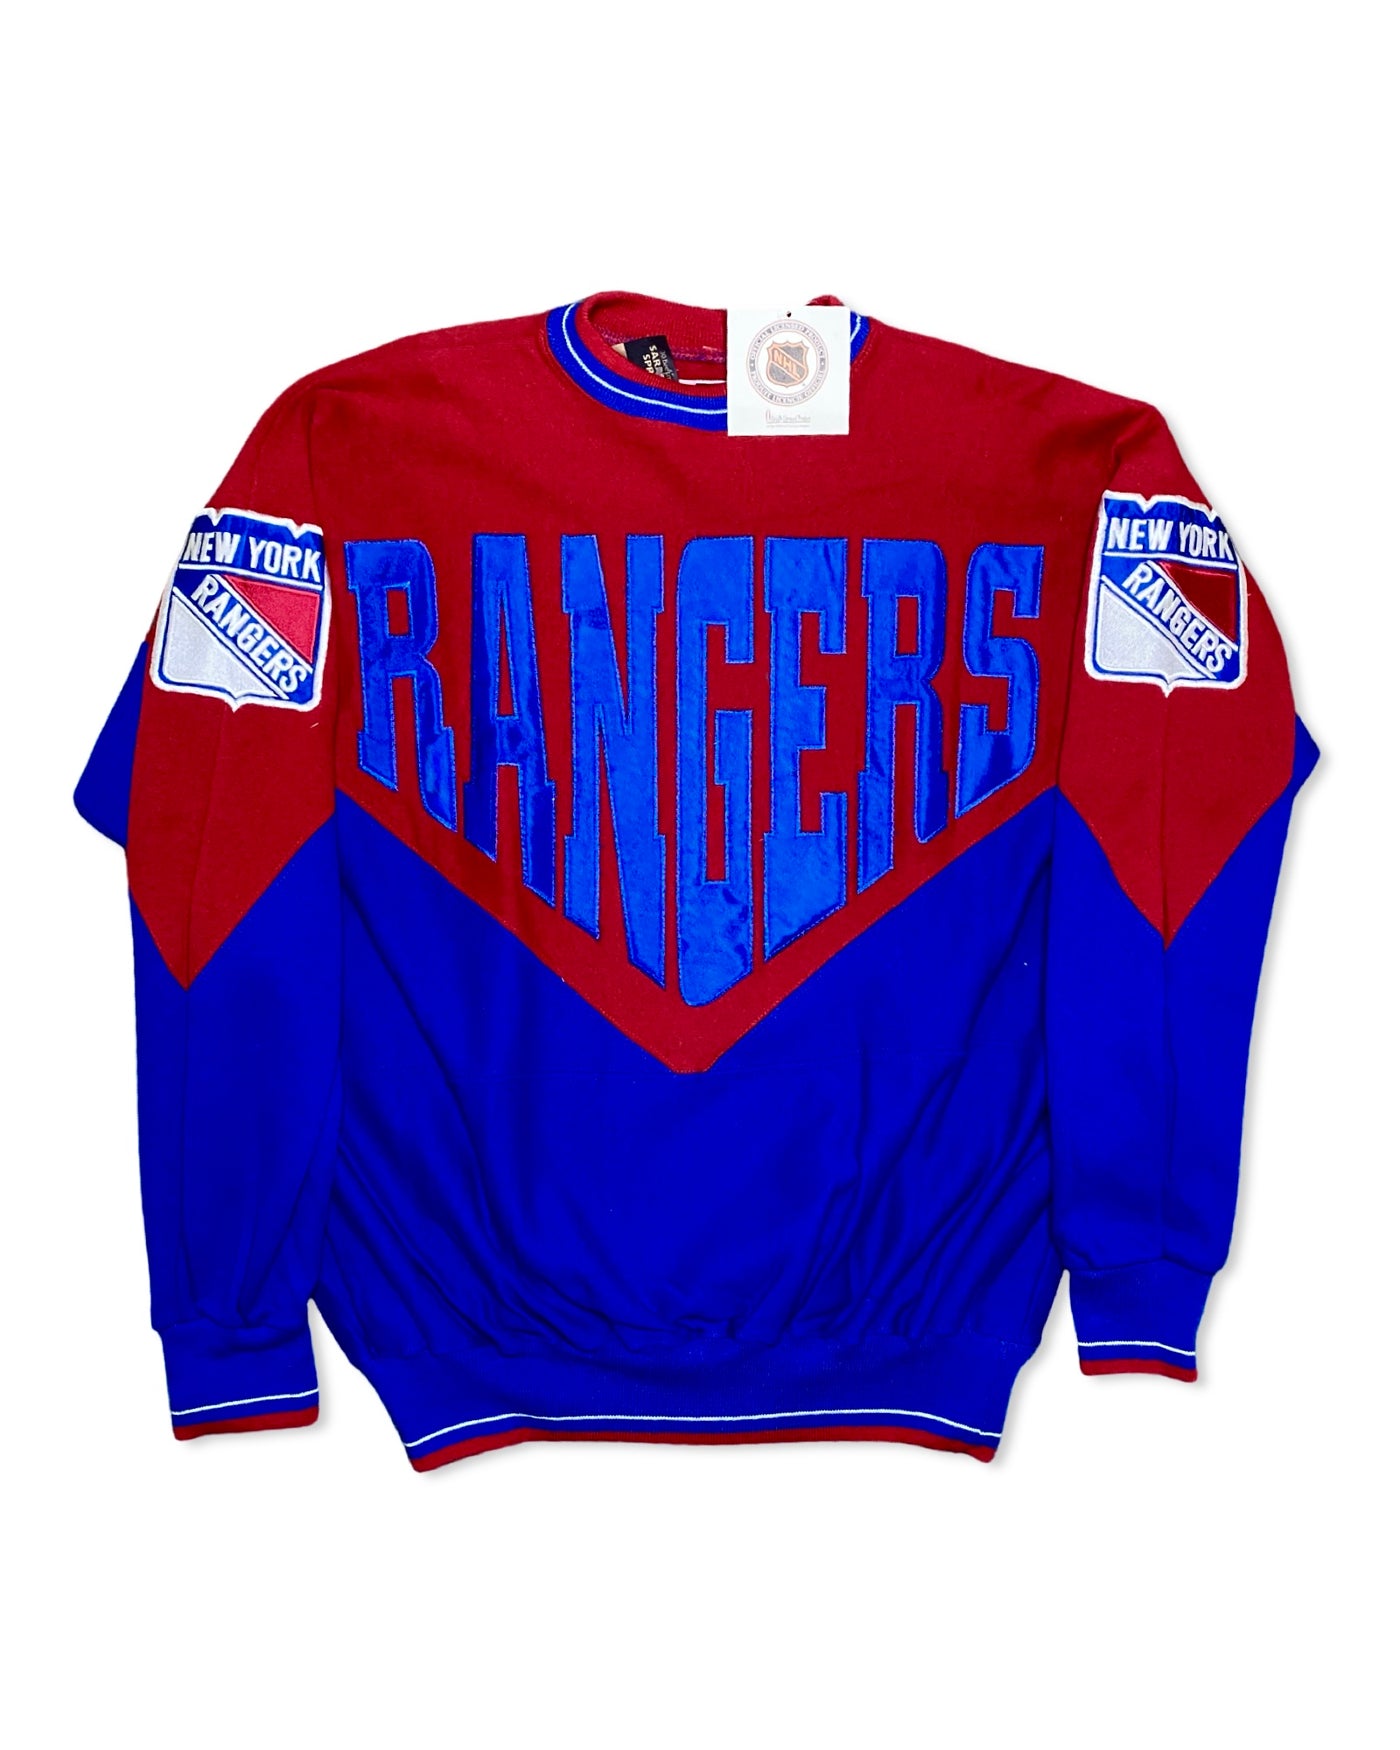 Vintage 90s New York Rangers Crewneck